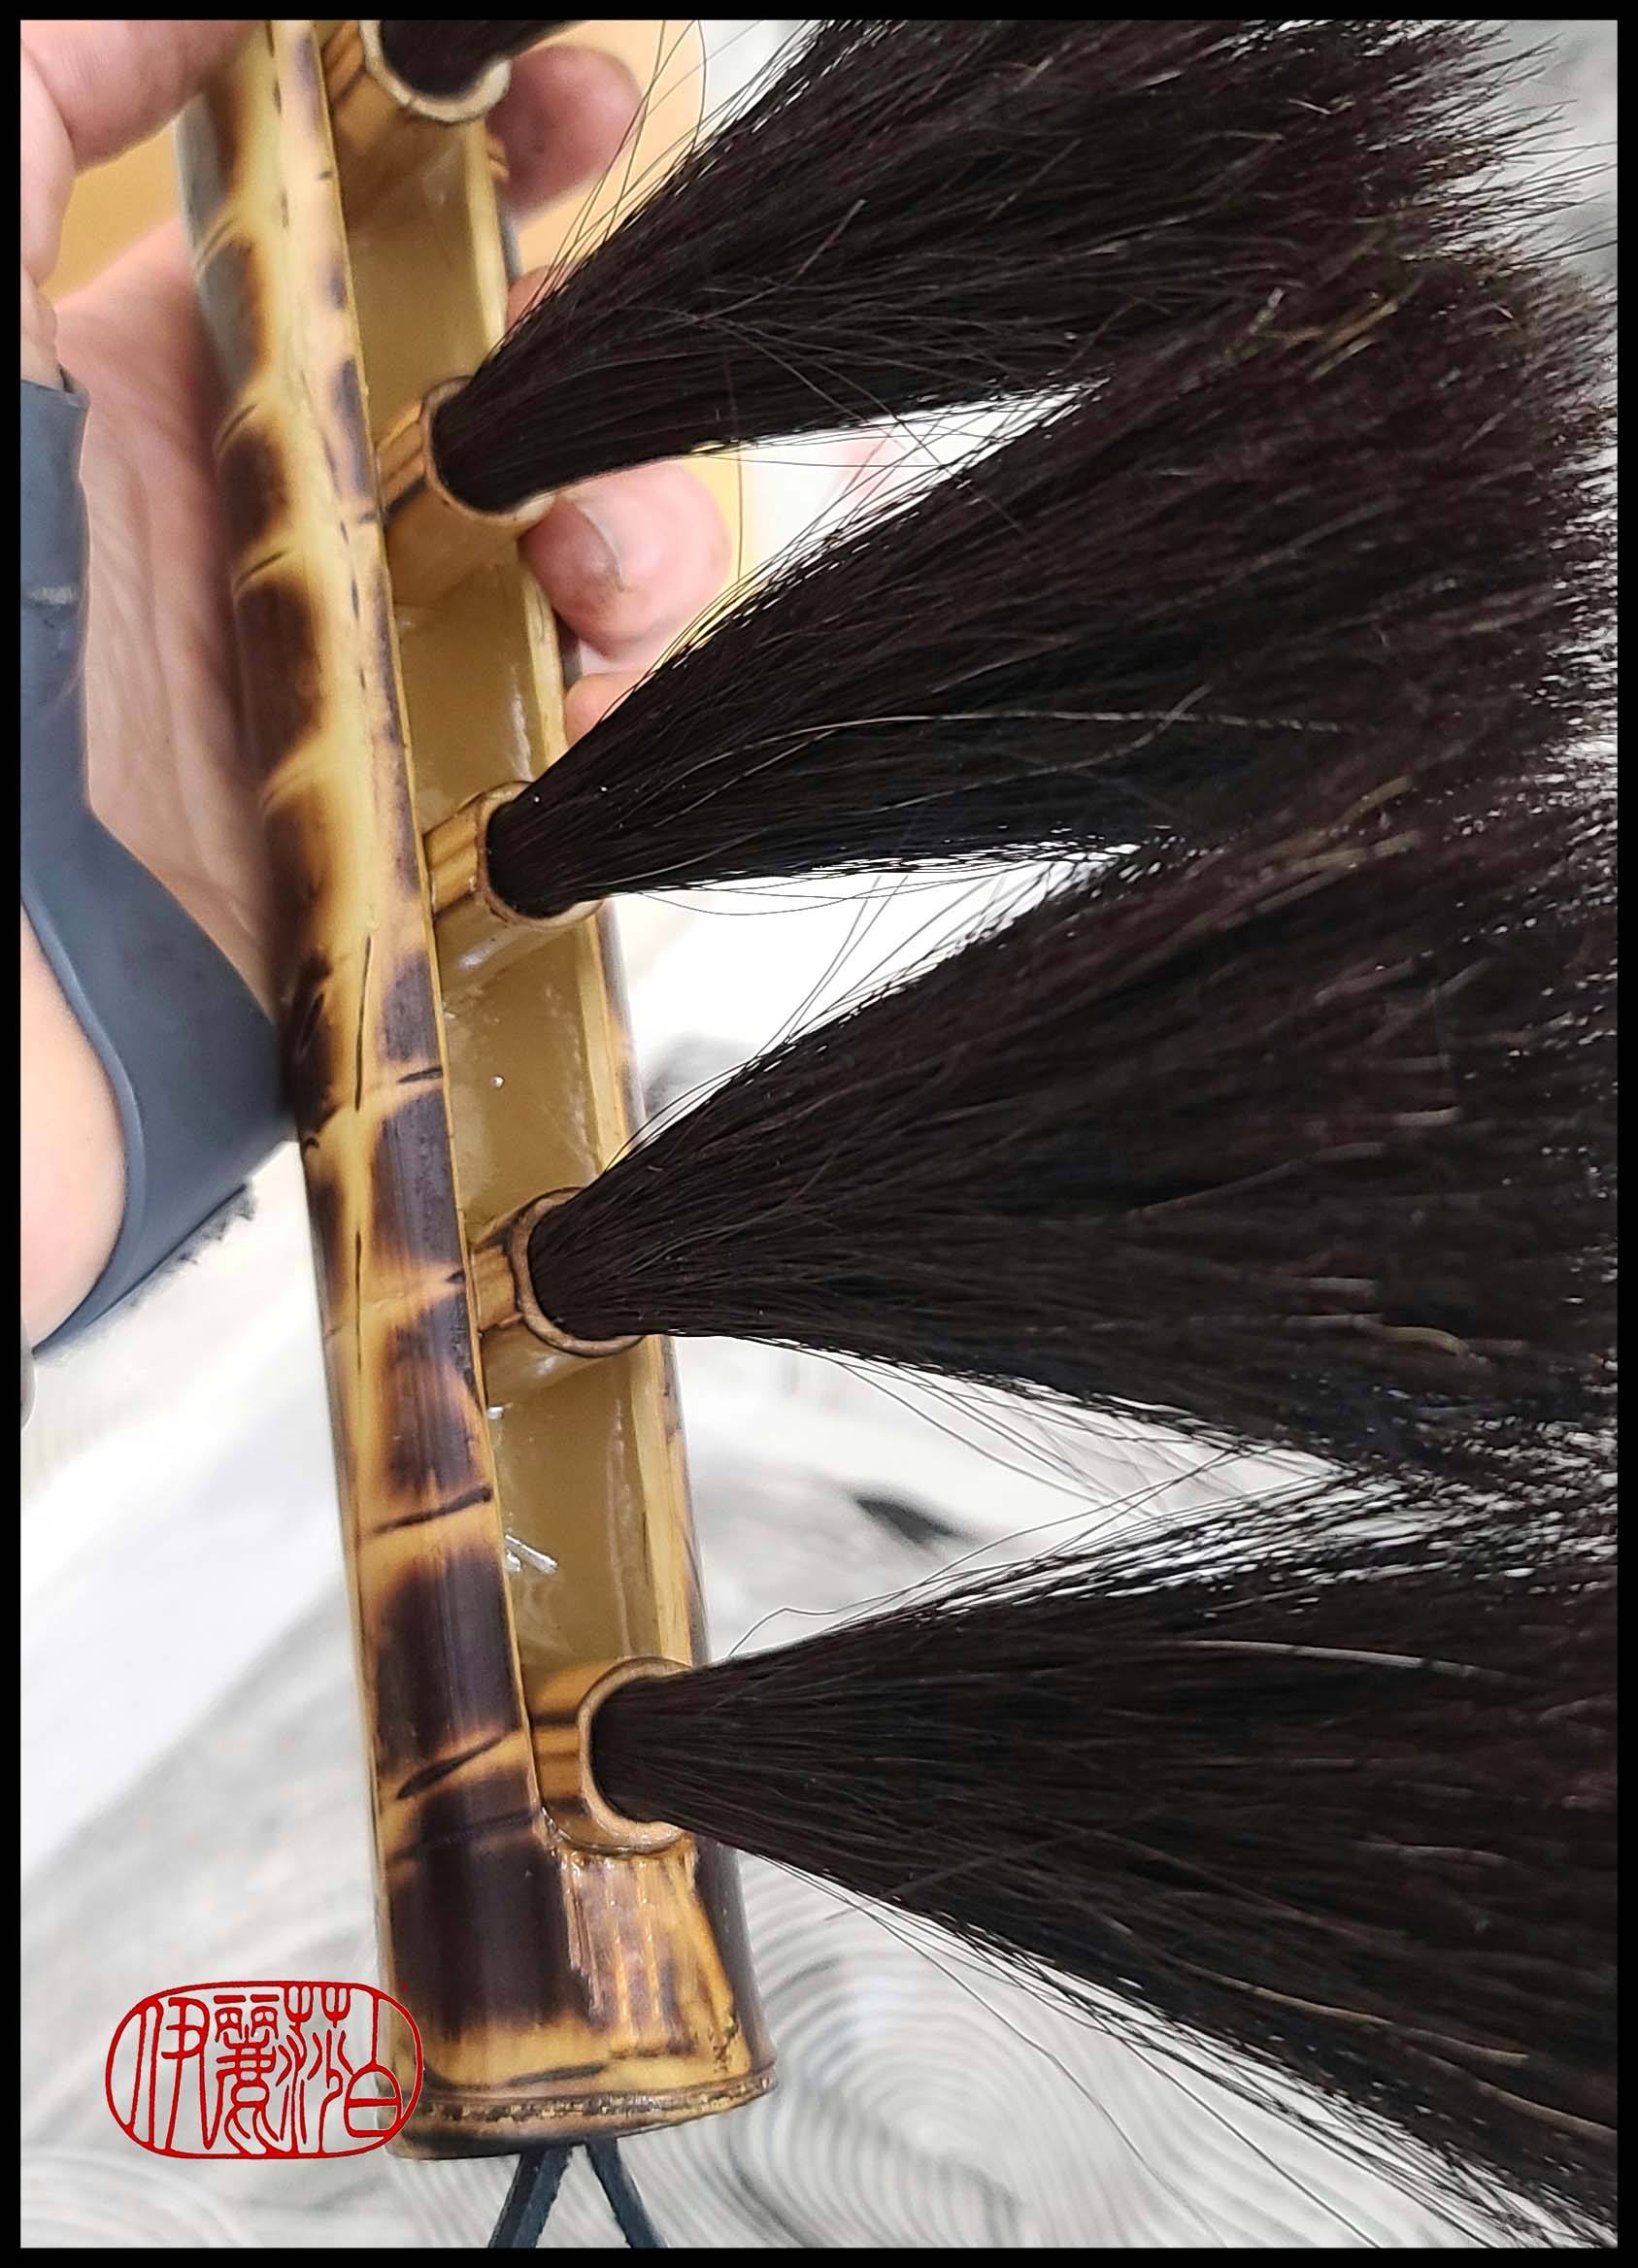 Wide Multi-Bristle Horsehair Paintbrush with Bamboo Handle WSB #103 Art Supplies Elizabeth Schowachert Art